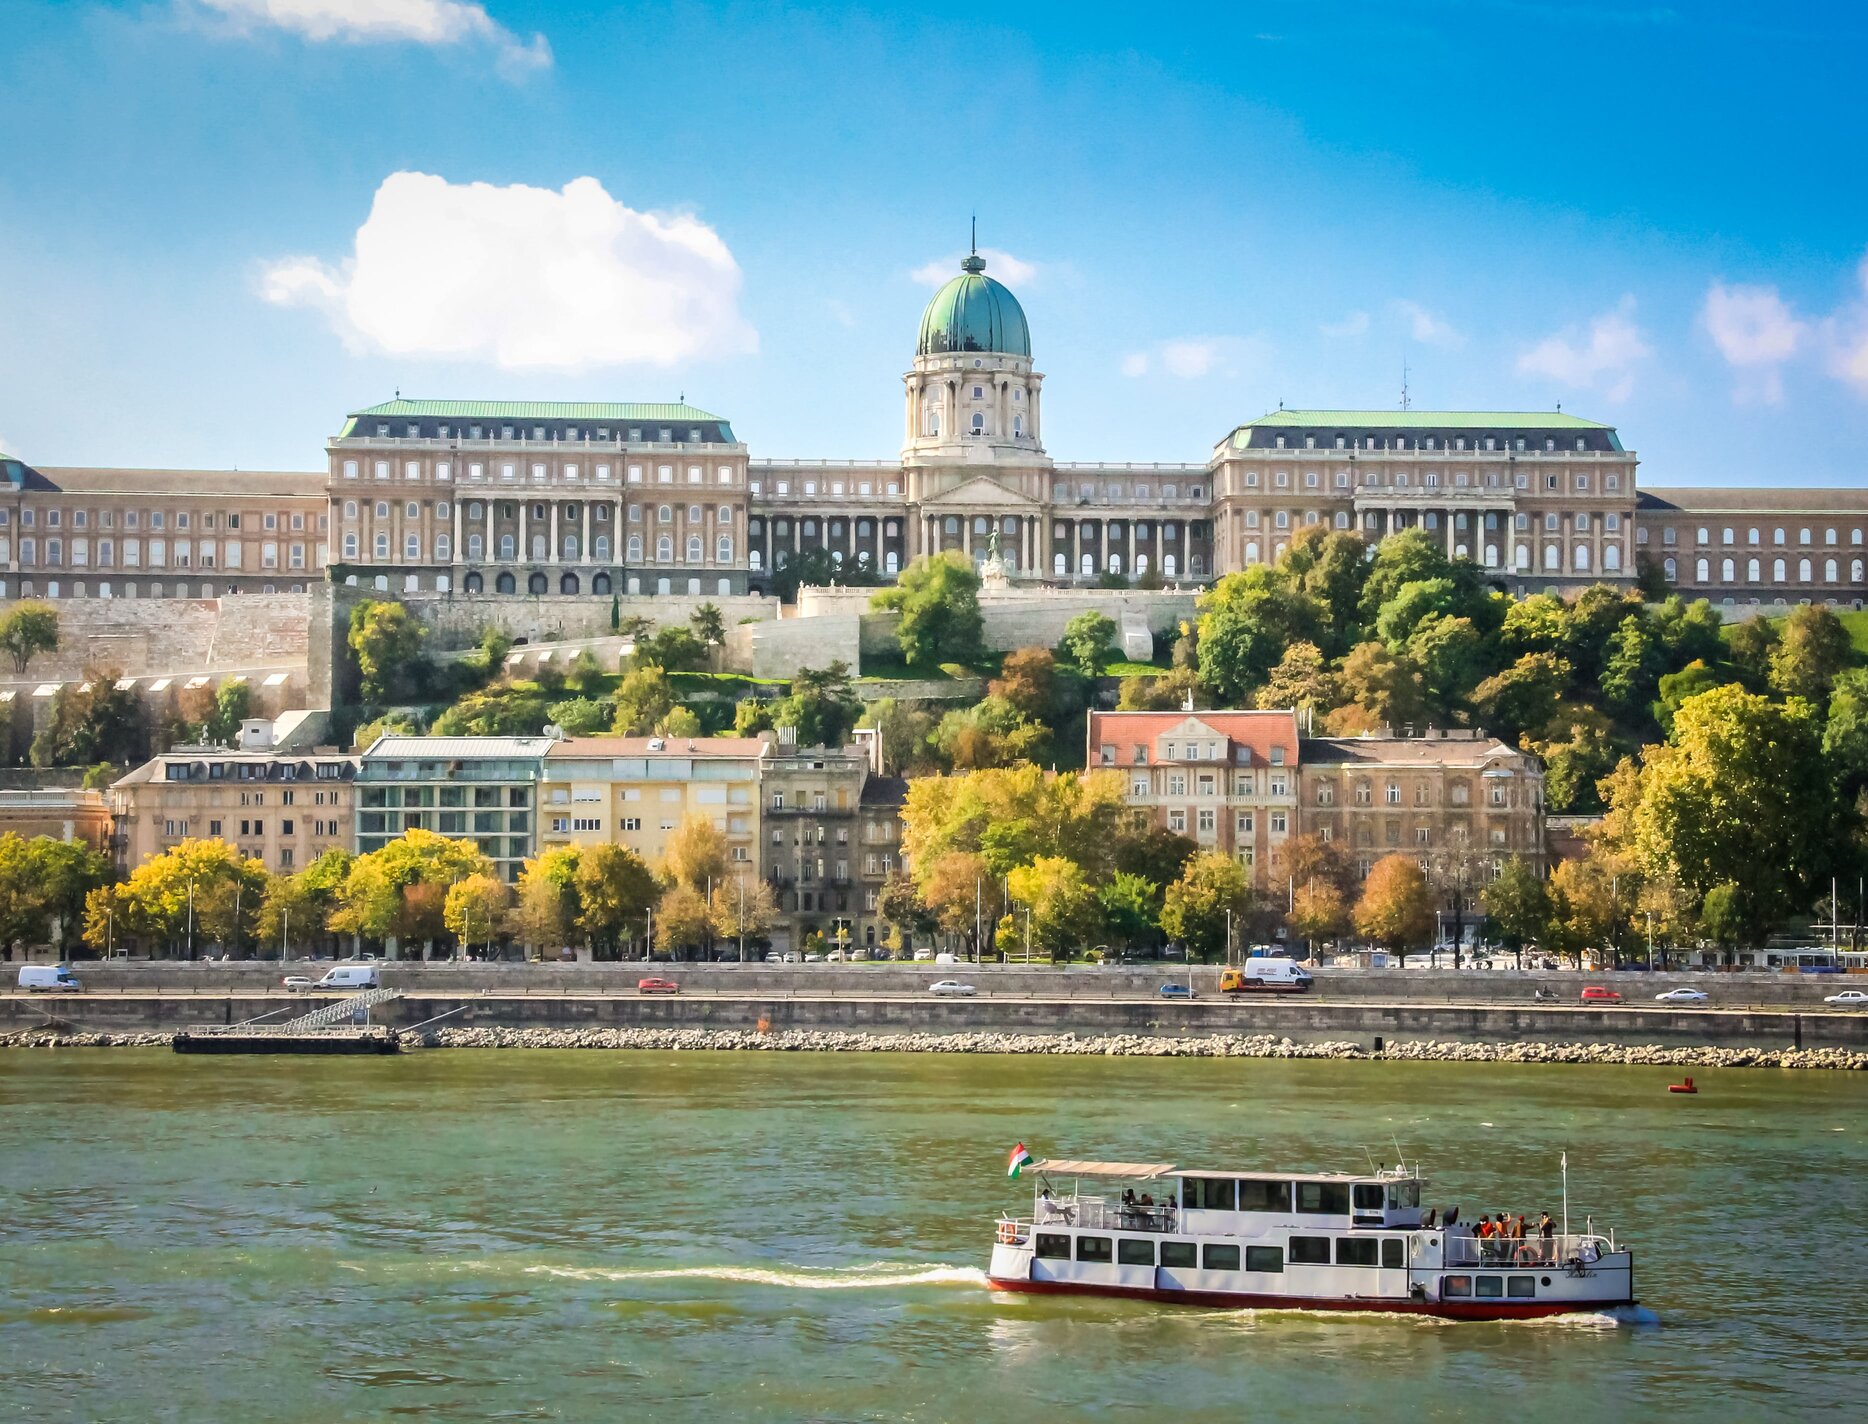 Buda Castle from the Danube